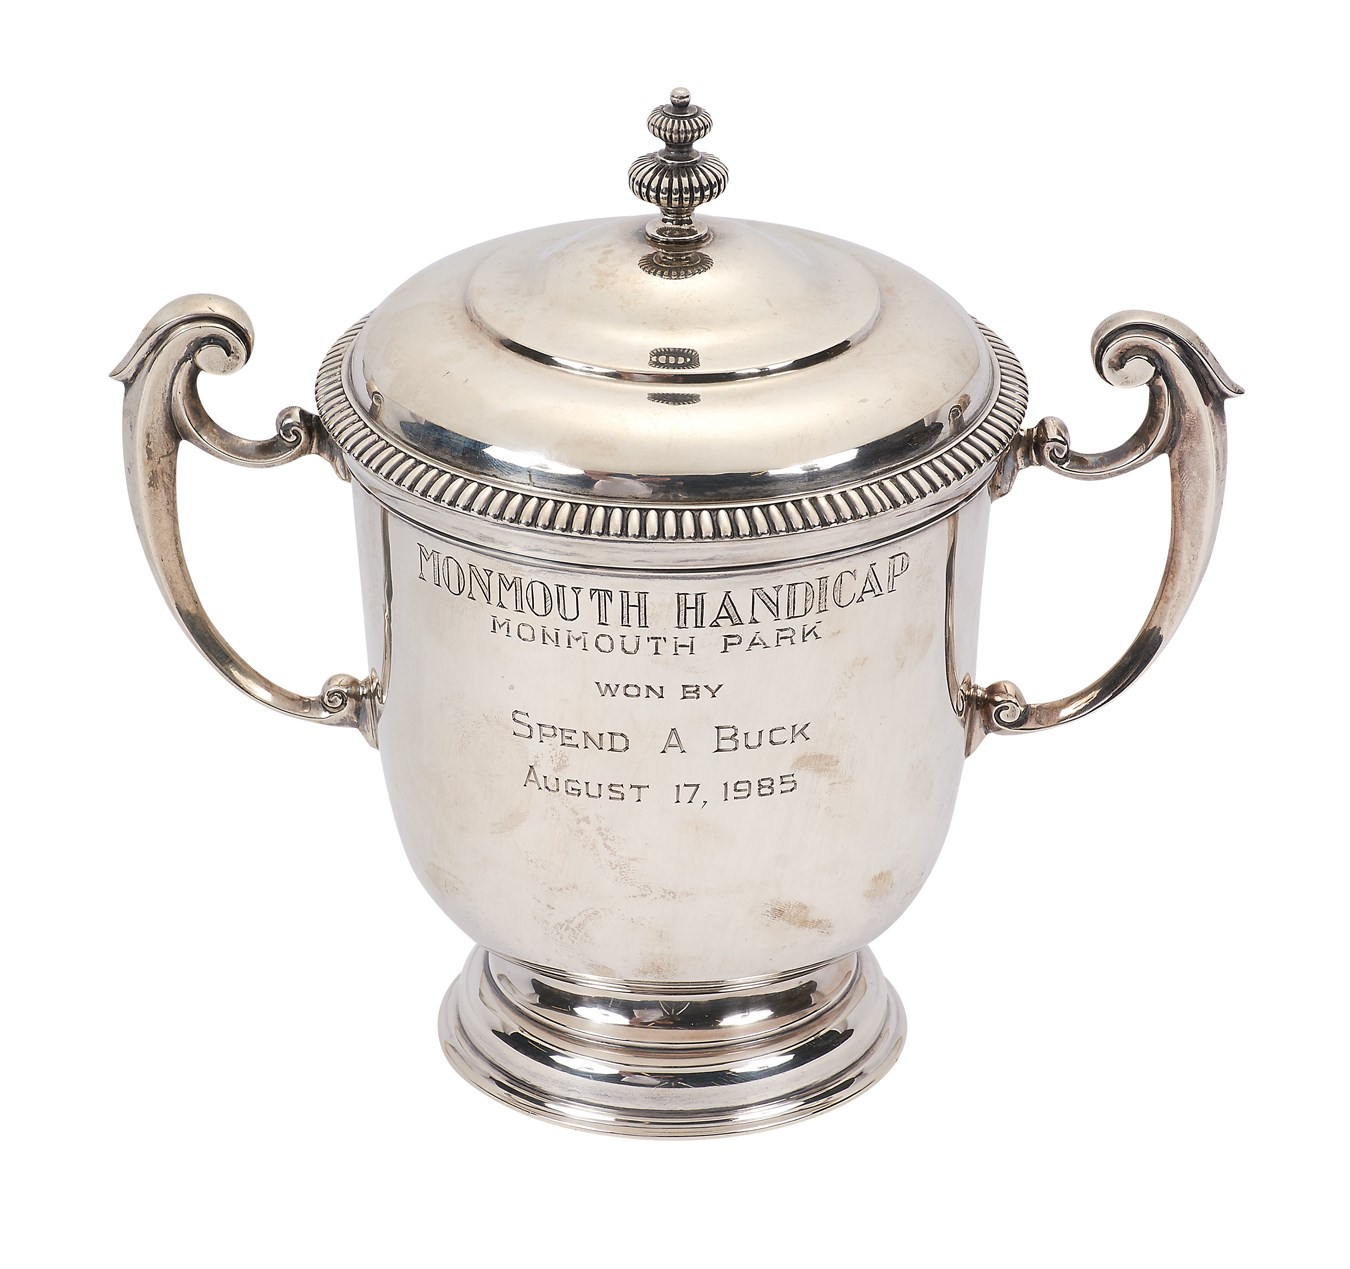 - 1985 Spend A Buck Monmouth Handicap Trophy